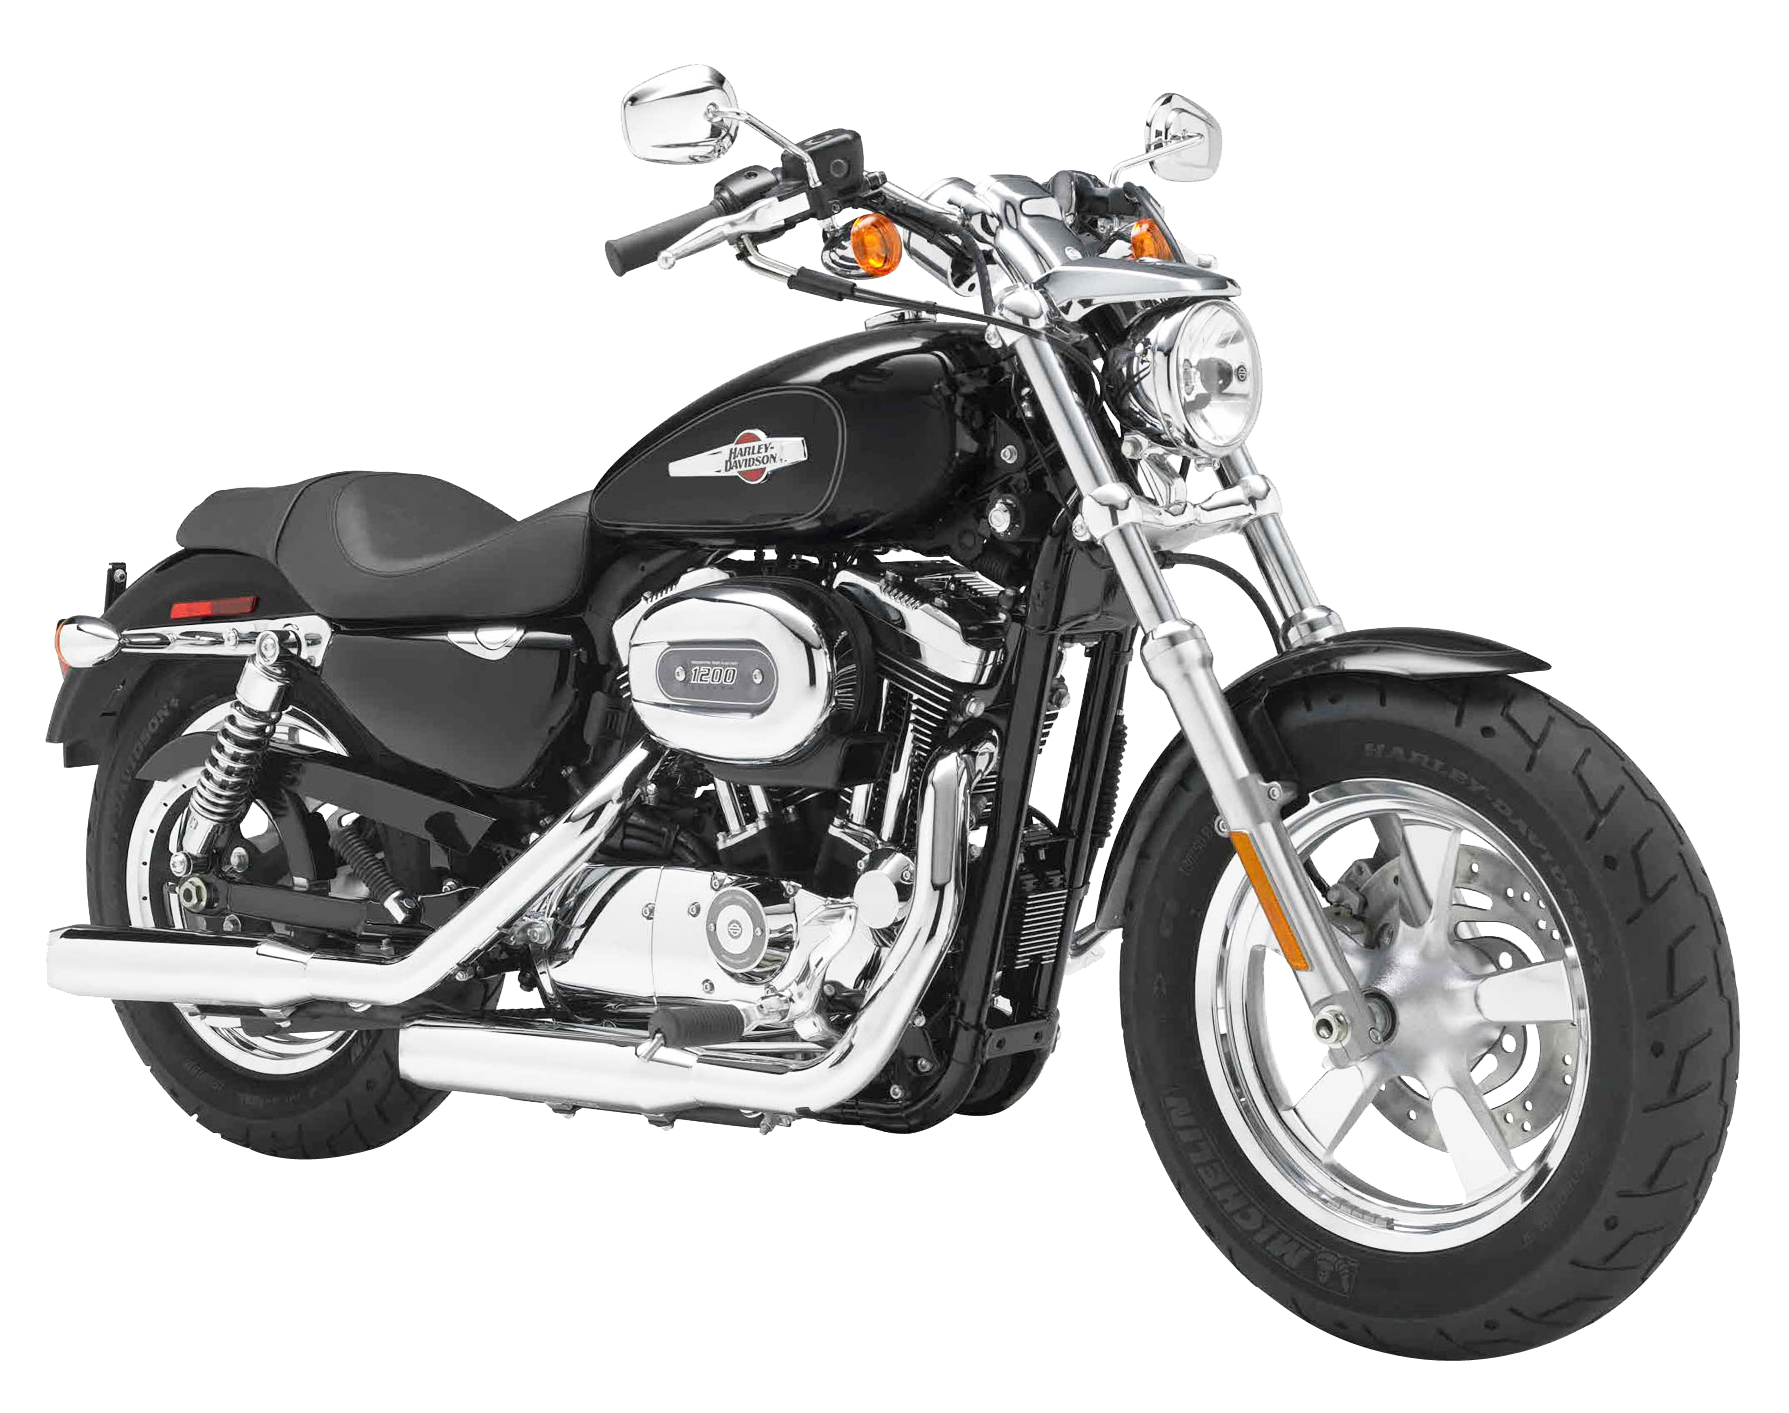 Harley Davidson Motorcycle Png Transparent Image Download Size